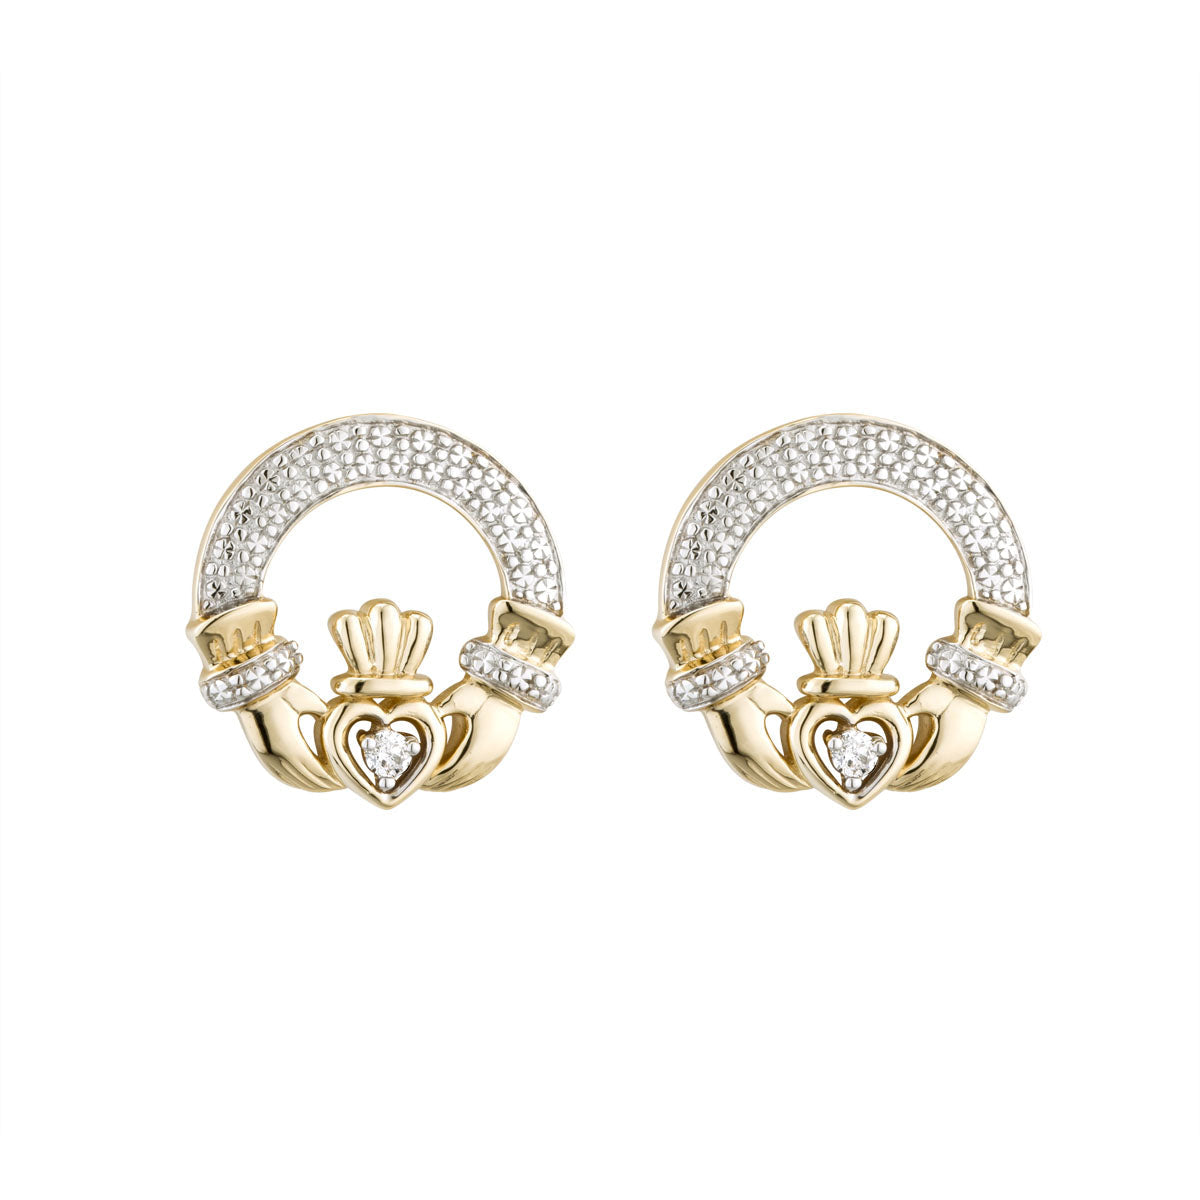 14K gold diamond claddagh earrings s33478 from Solvar